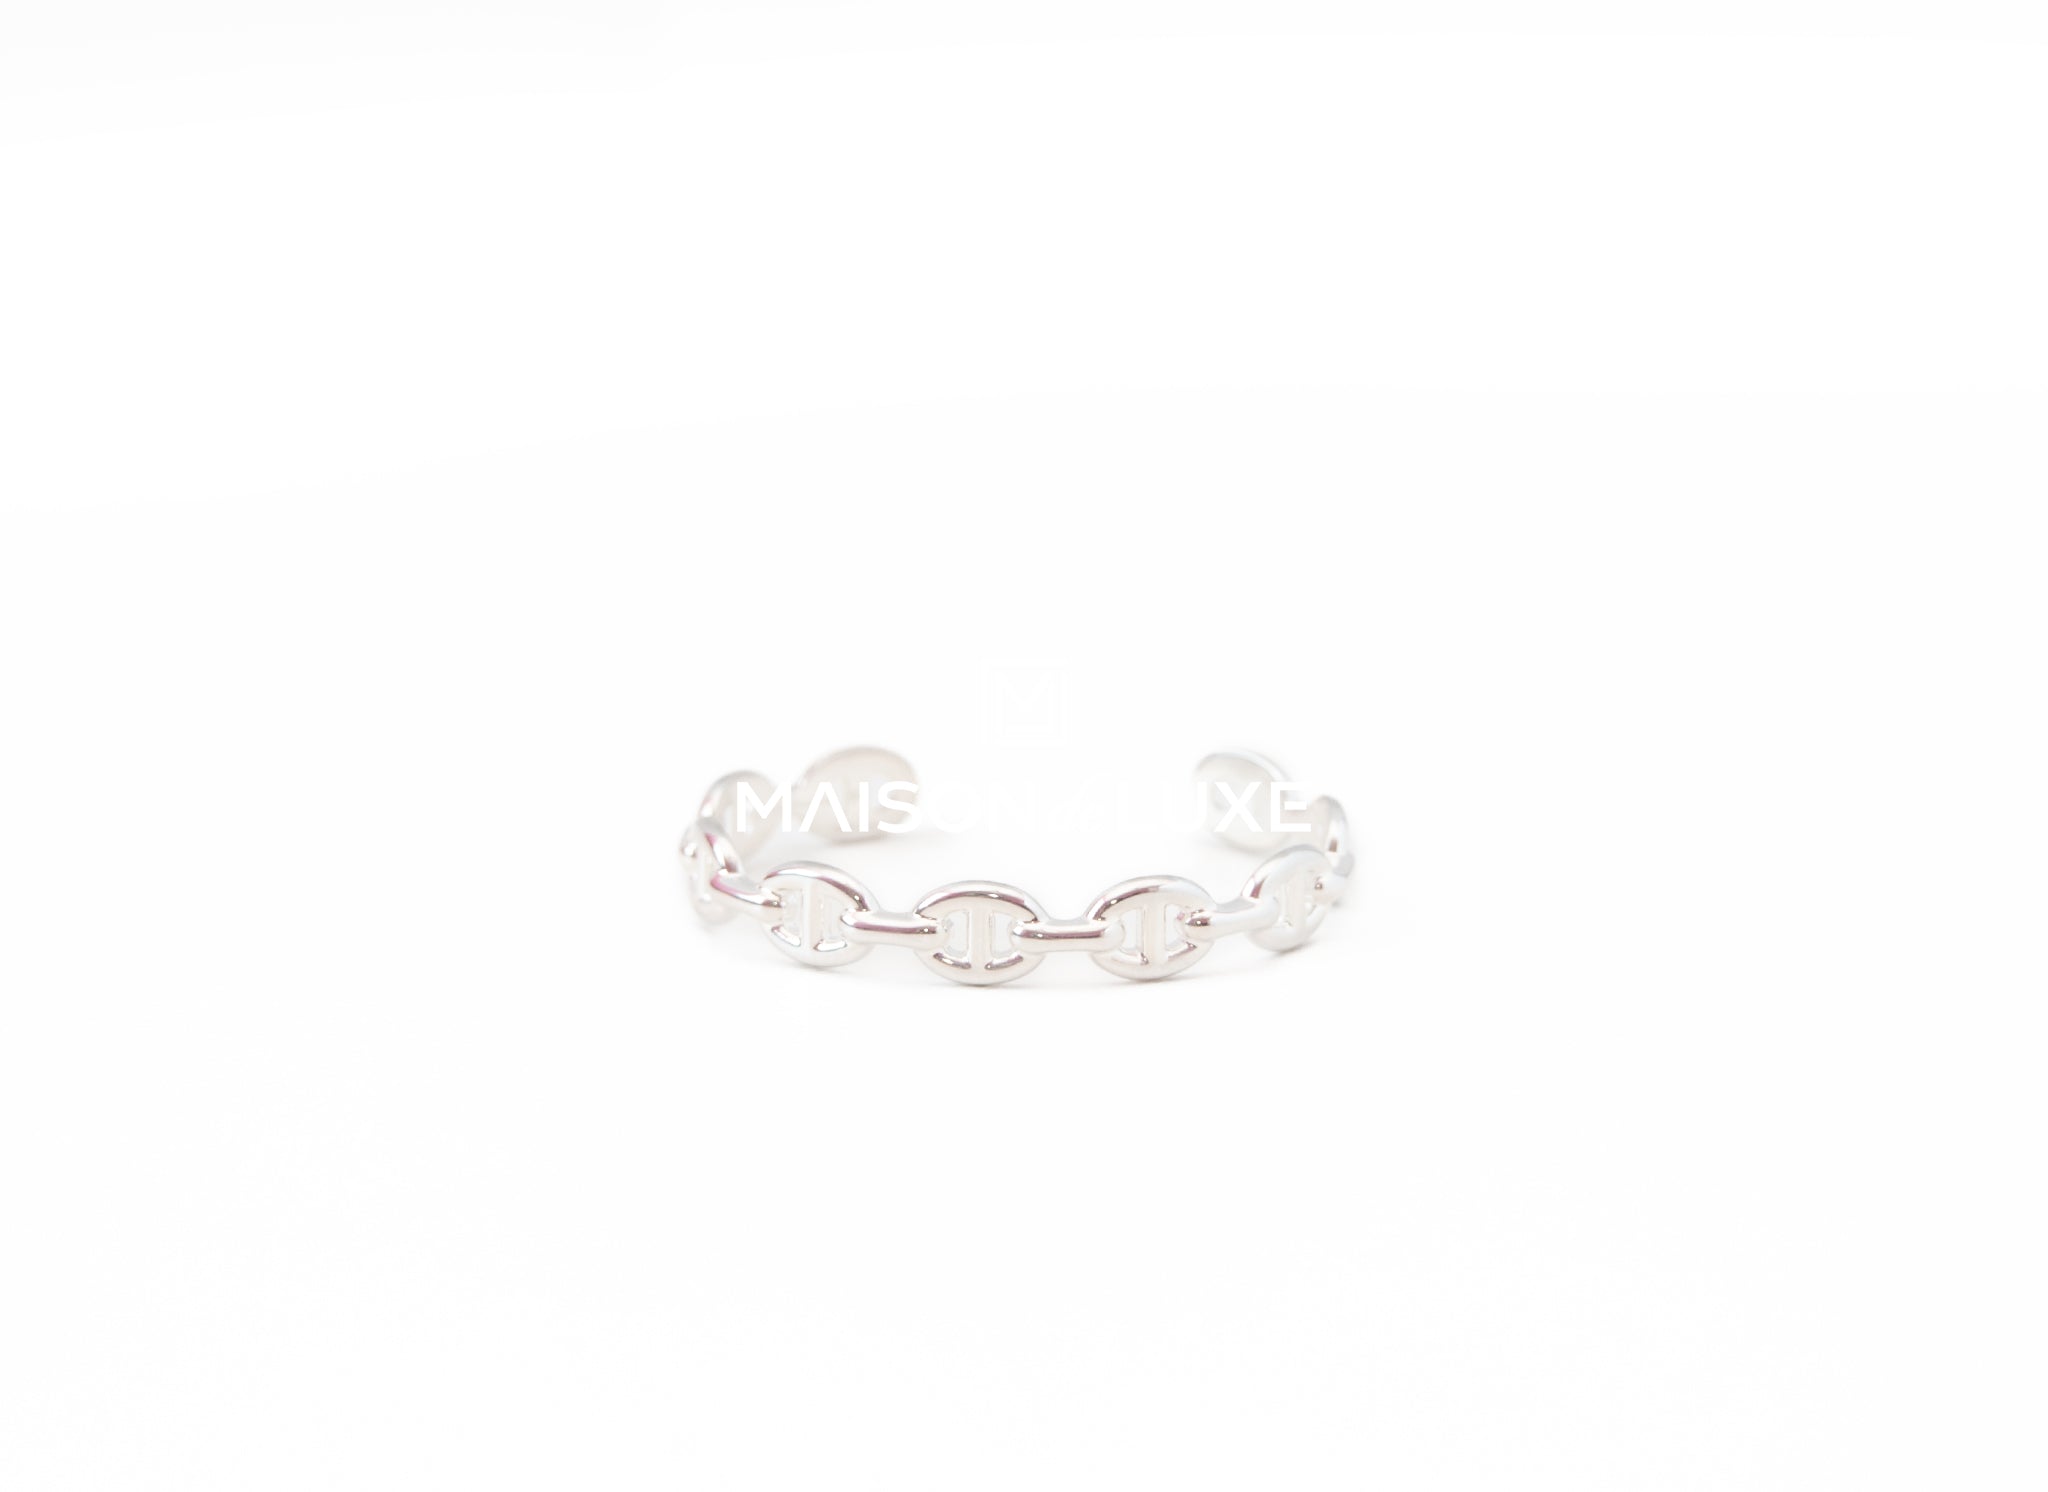 Silver Hermes Chaine d'Ancre Anchor Bracelet – Designer Revival